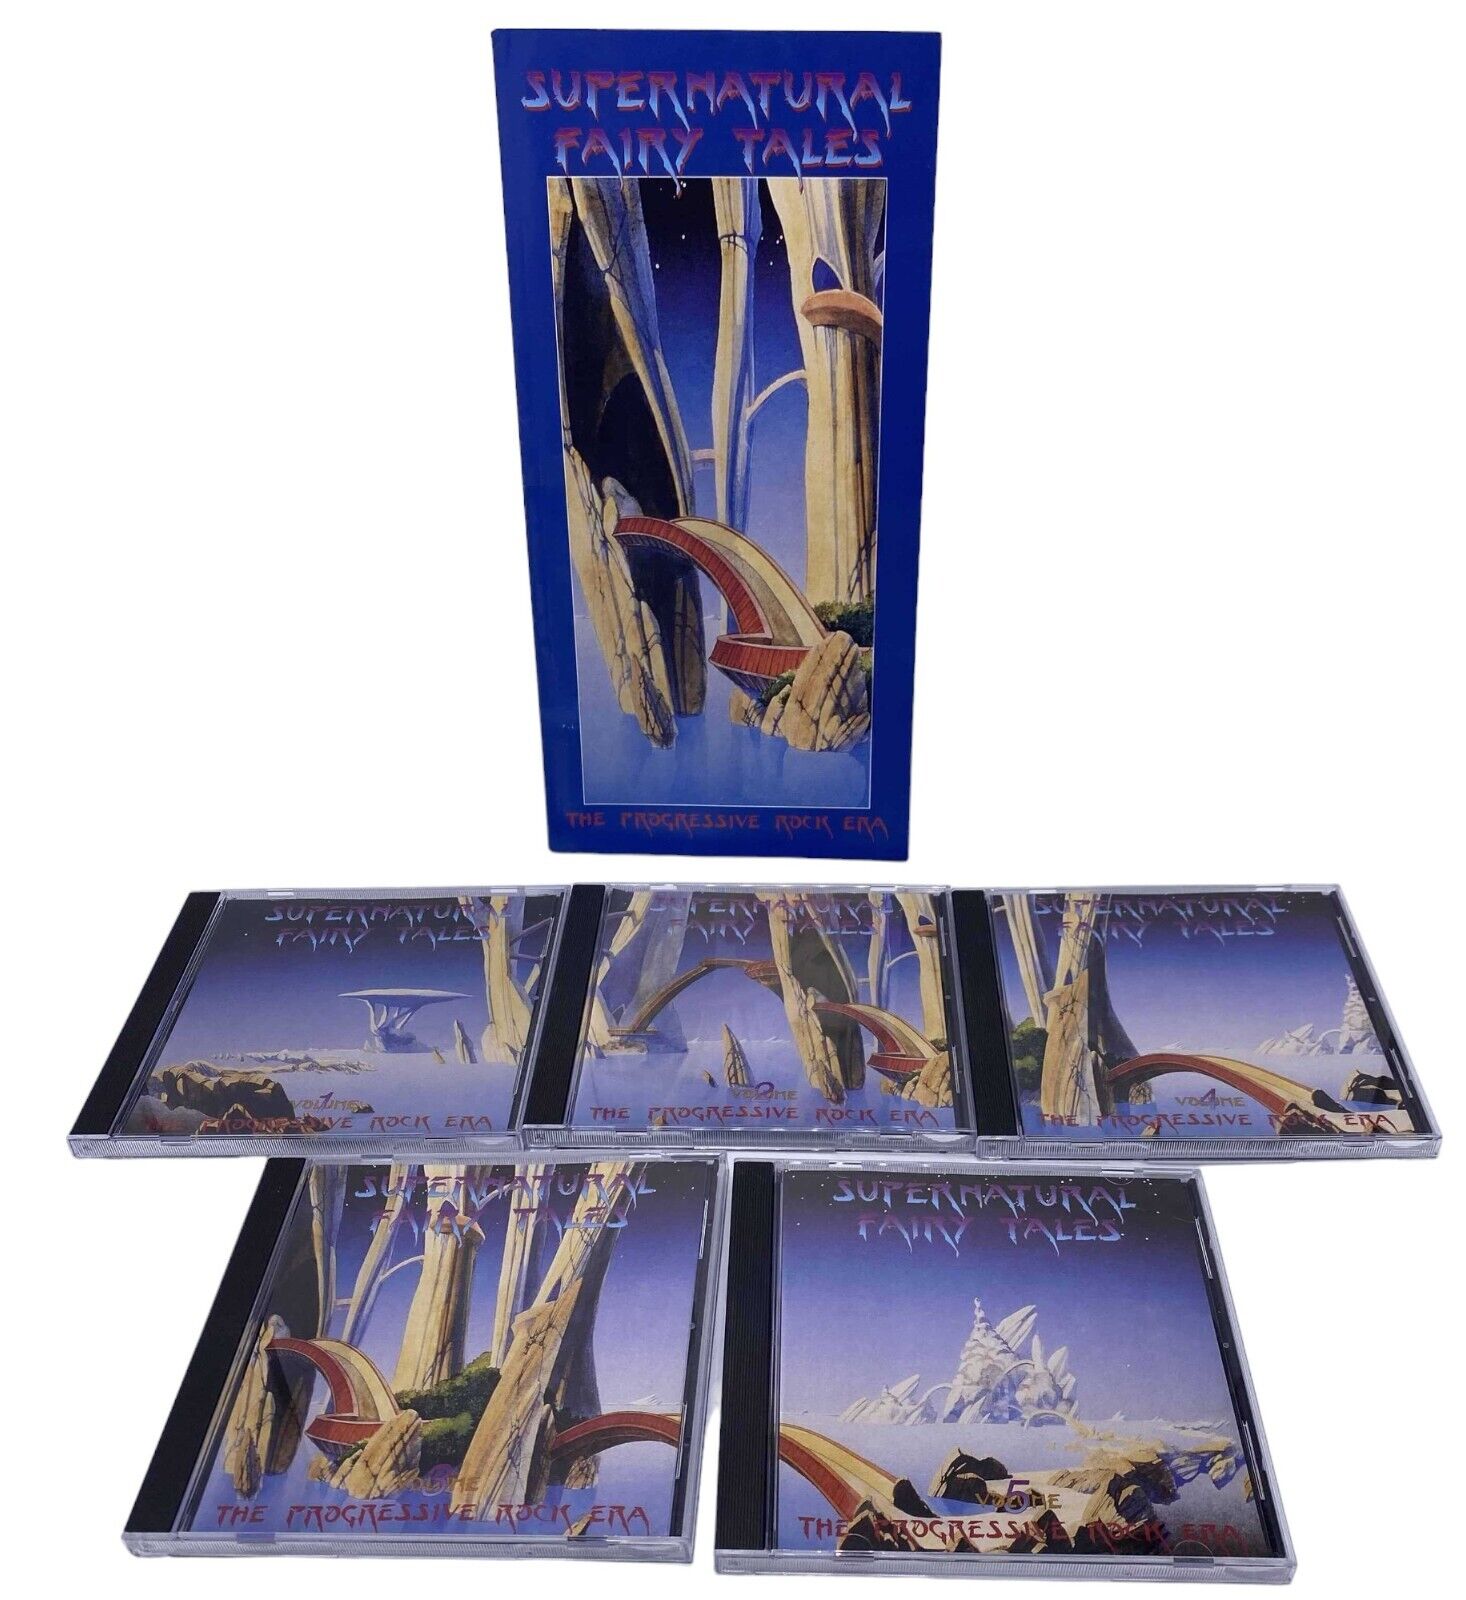 Supernatural Fairy Tales 5 CD Box Set Progressive Rock Era Rhino Prty Mail Shp